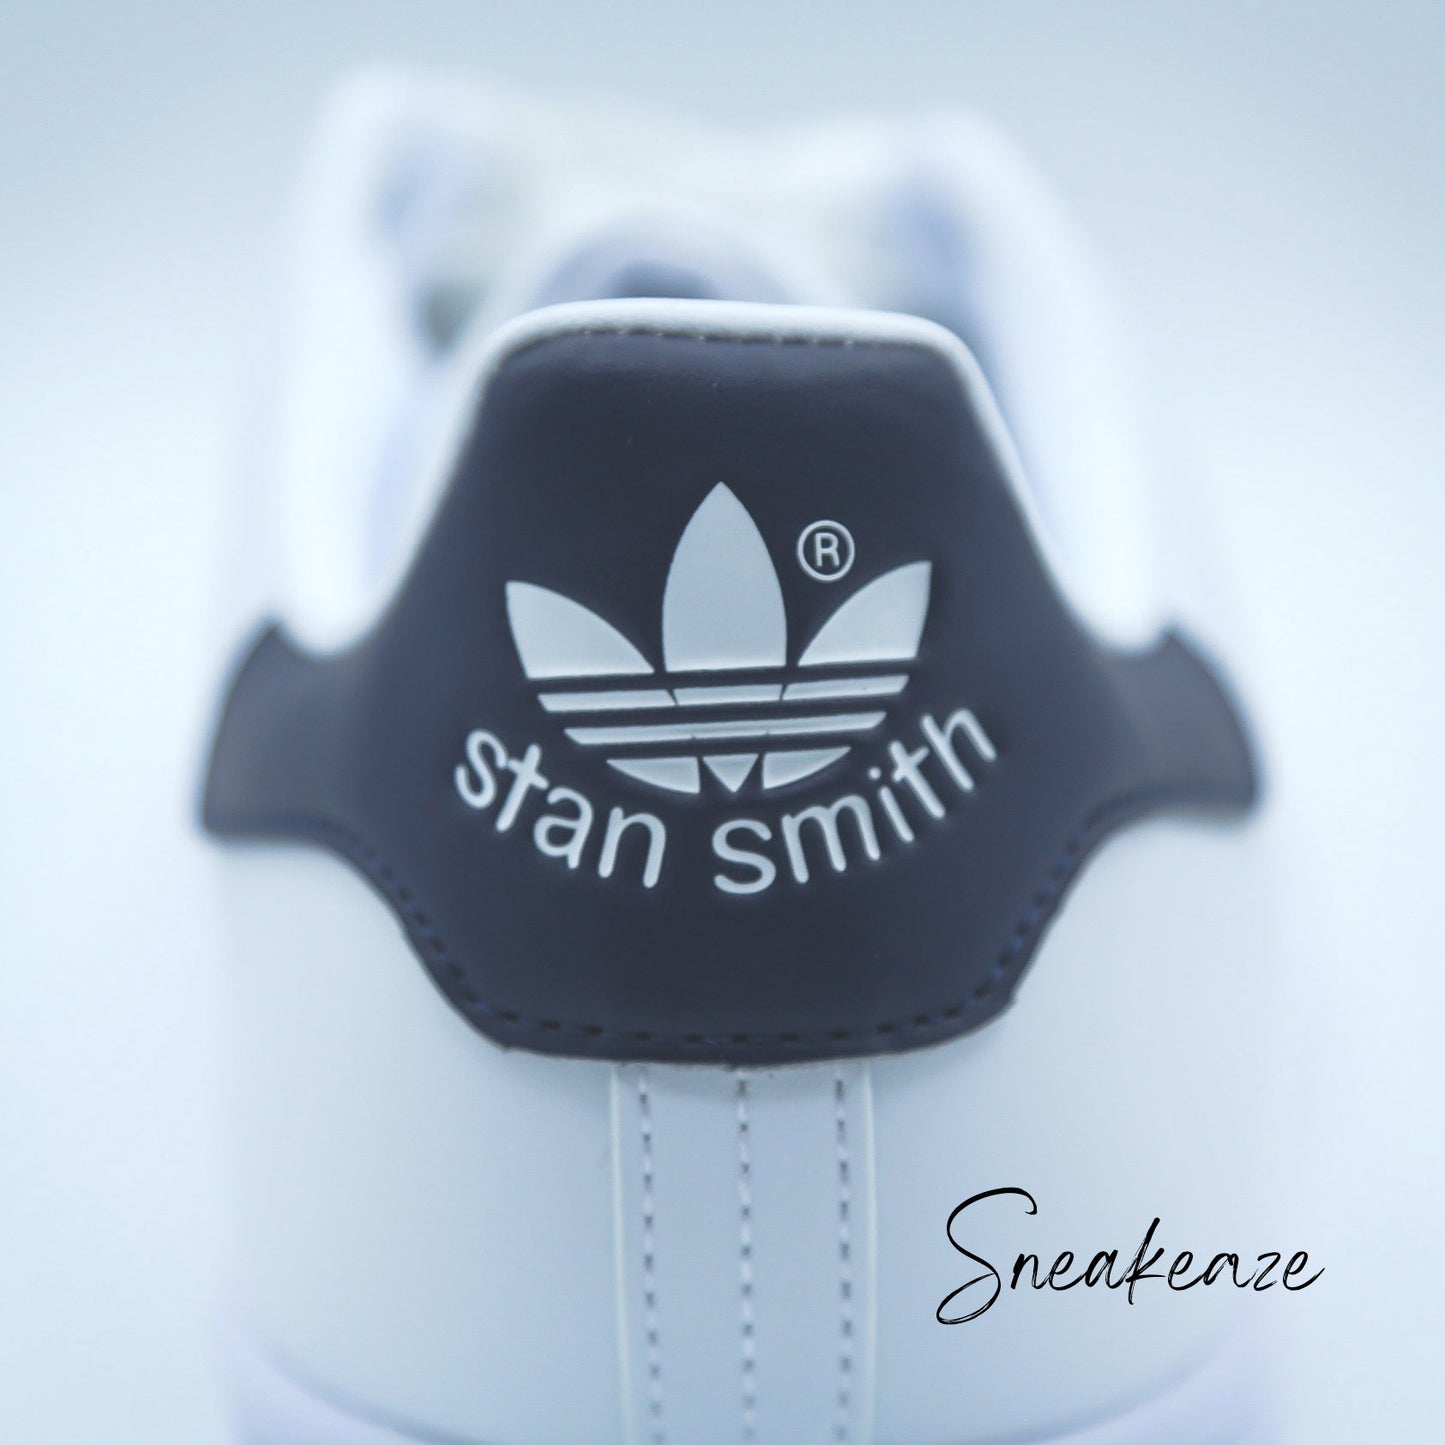 Mr & Mrs - Stan Smith custom